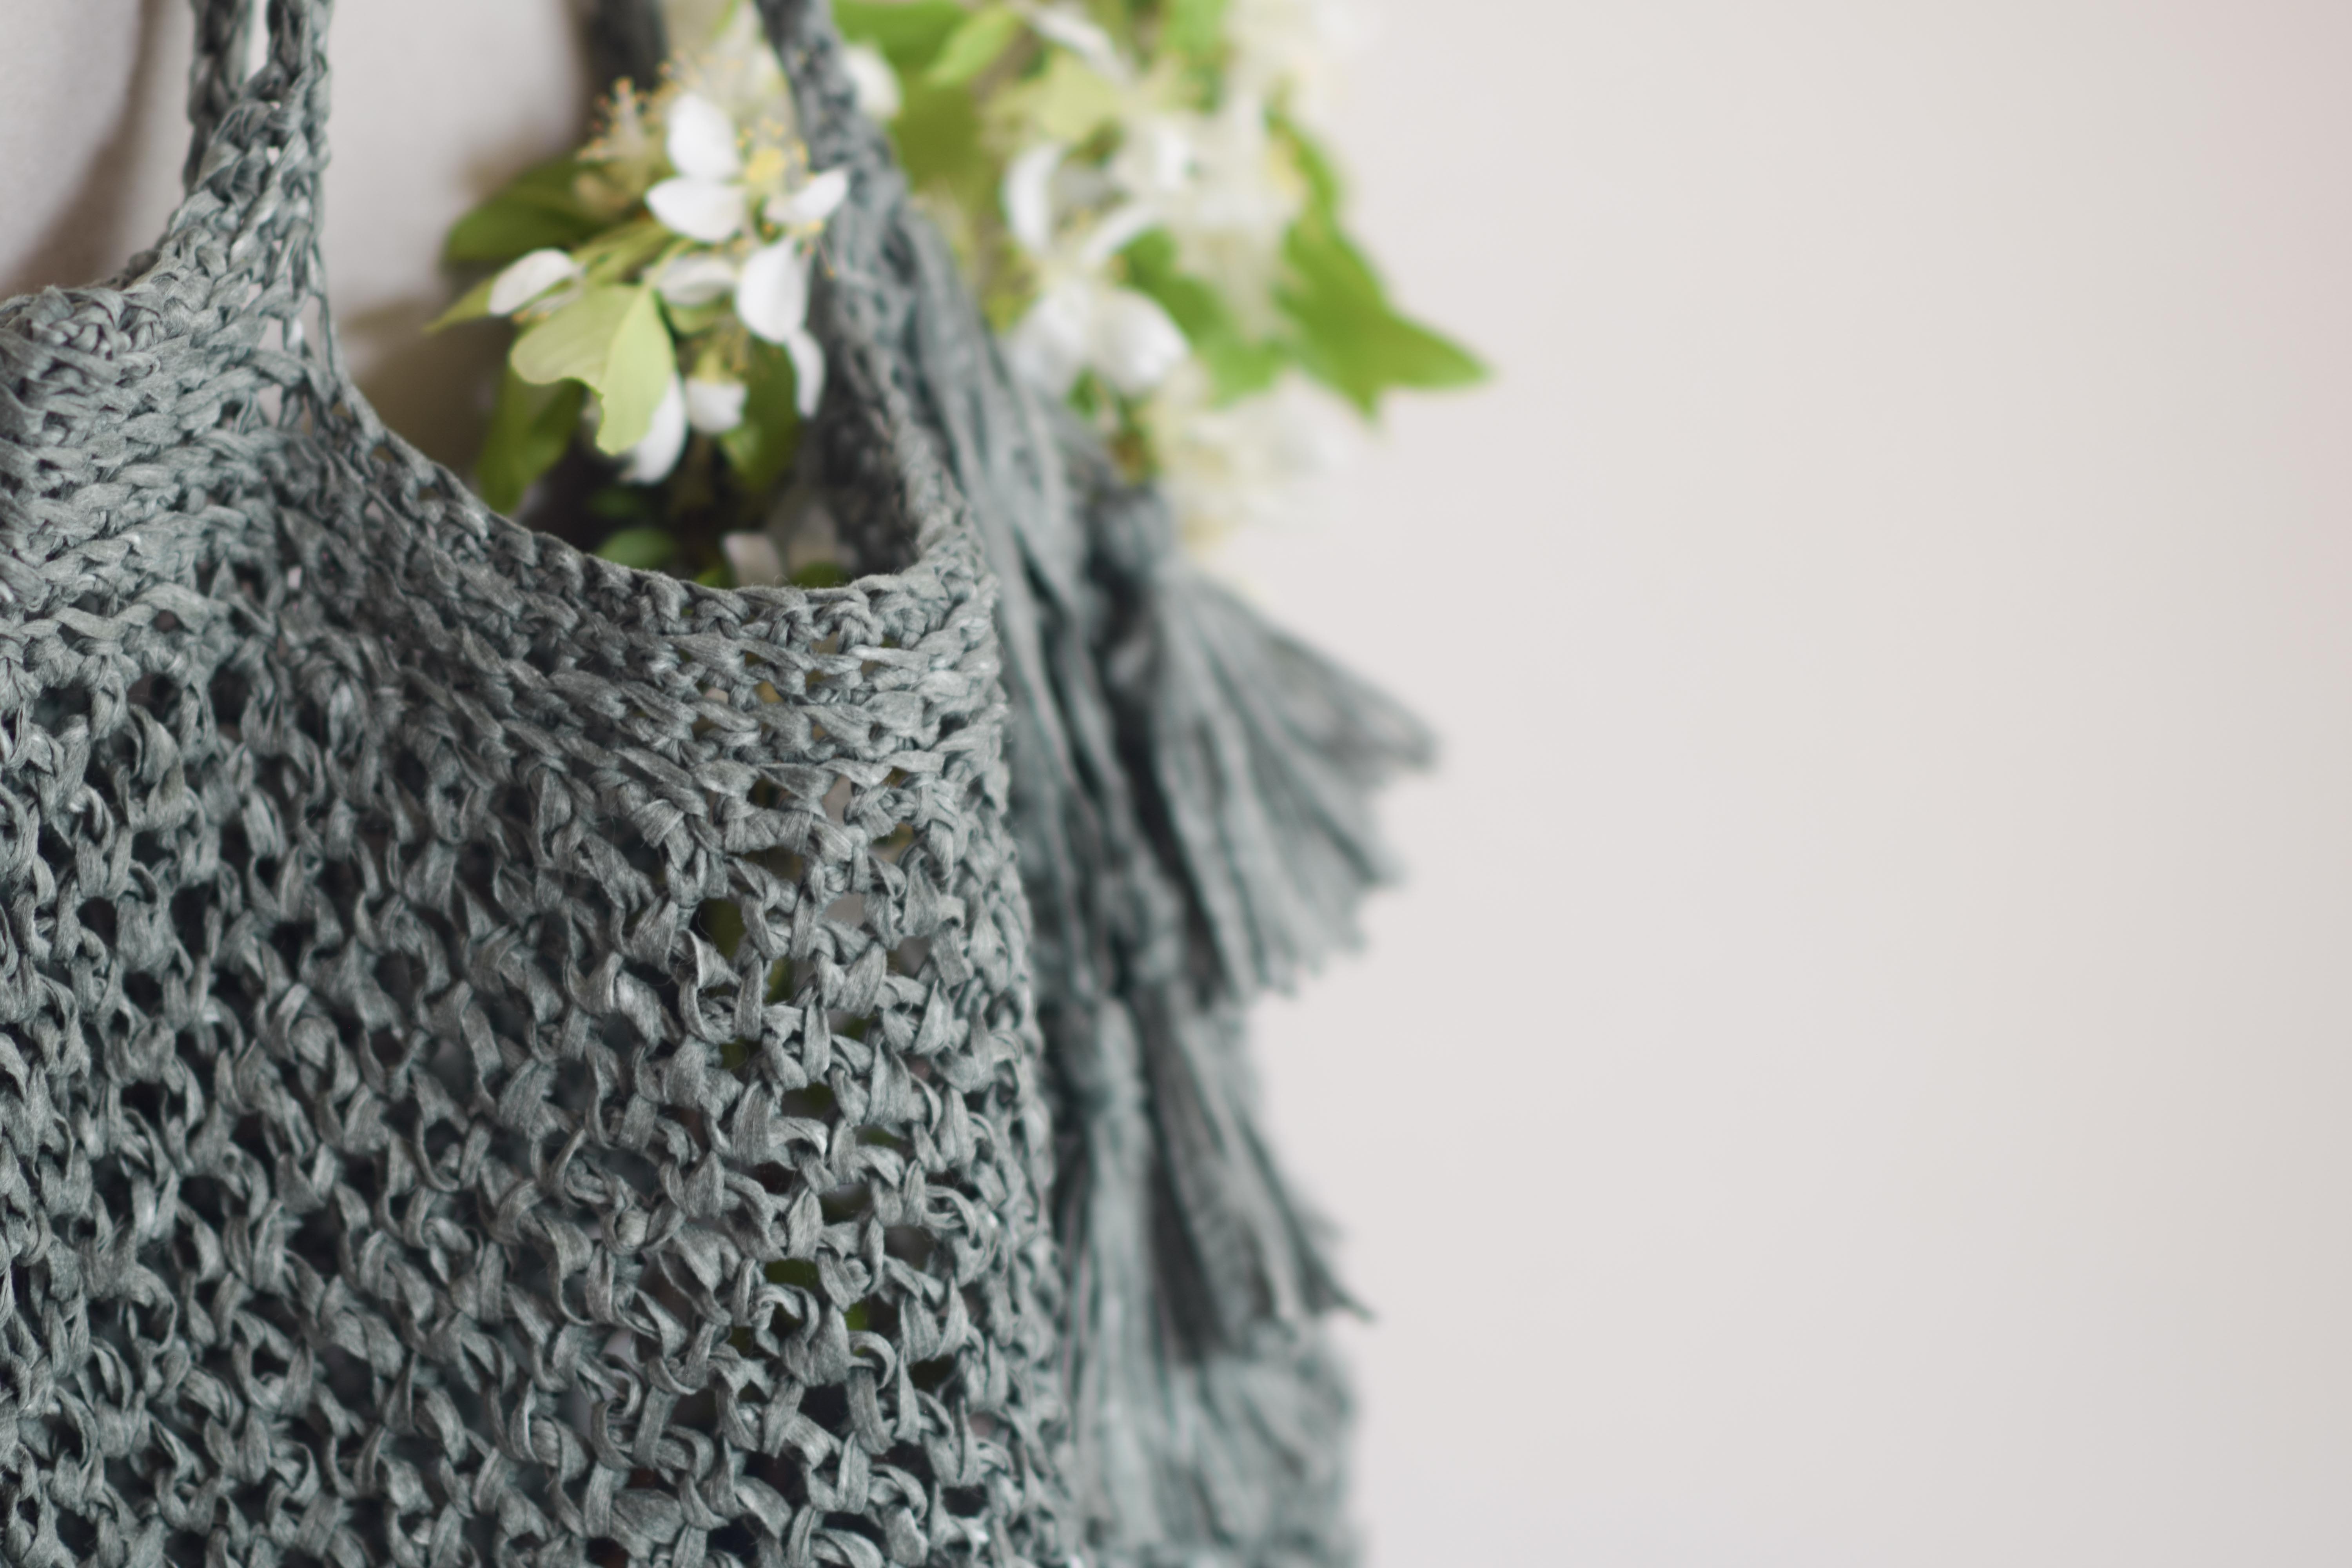 Rainbow Tote Bag - Free Crochet Pattern Loops & Love Crochet